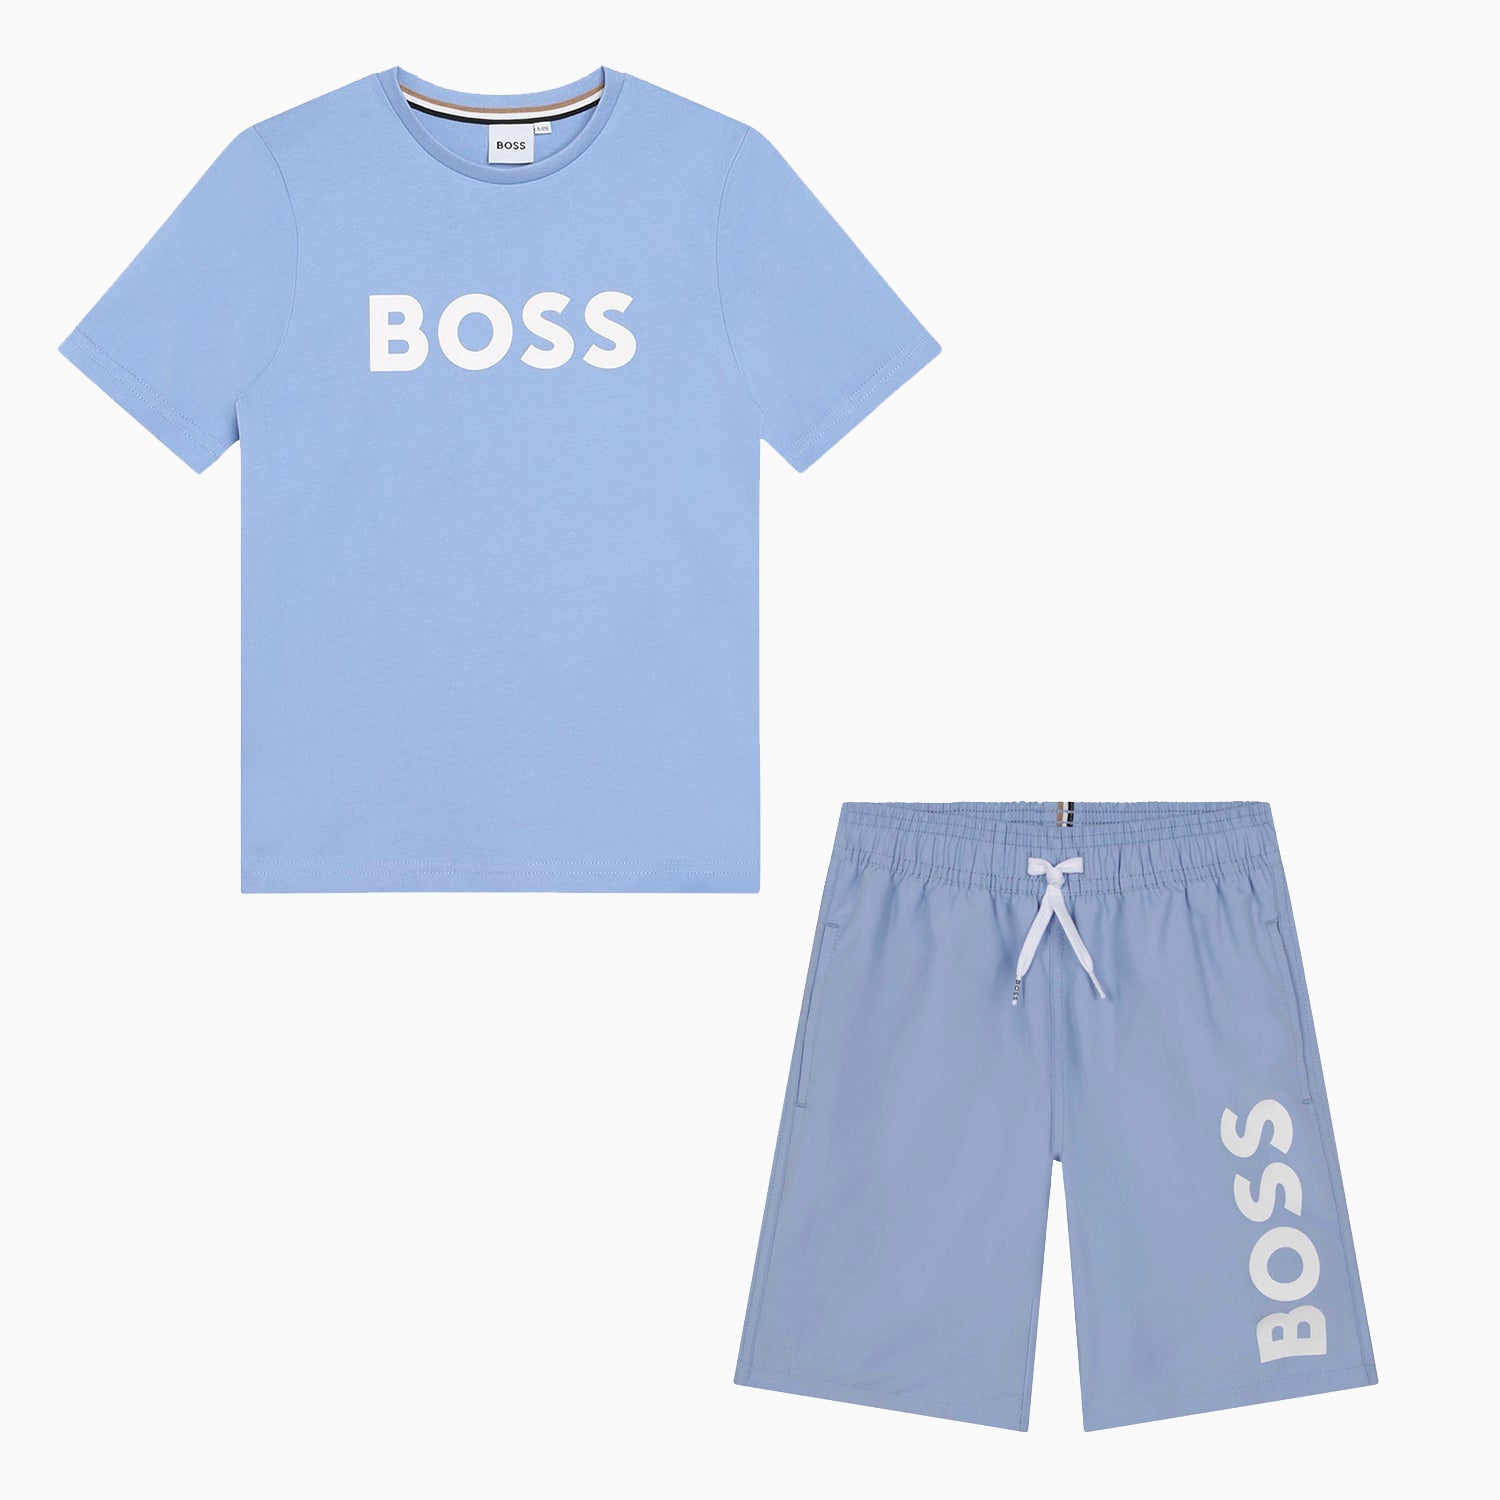 Hugo Boss Kid's Premium Big Logo Outfit - Color: Pale Blue - Kids Premium Clothing -